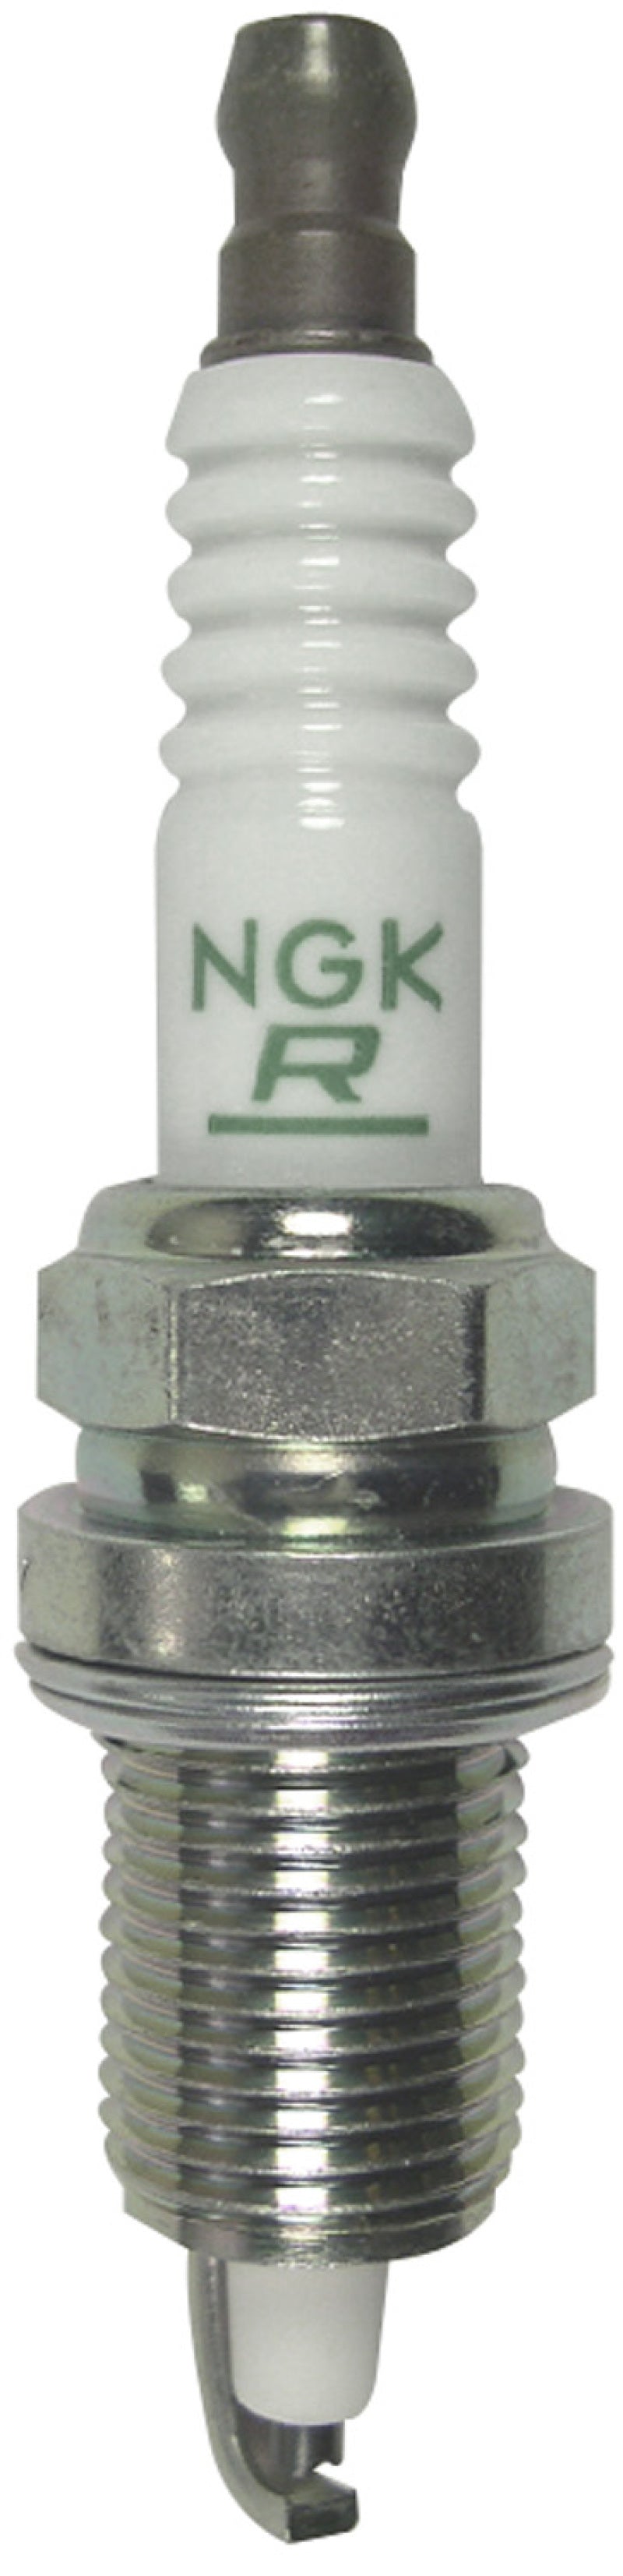 NGK V-Power Spark Plug Box of 4 (ZFR5N)